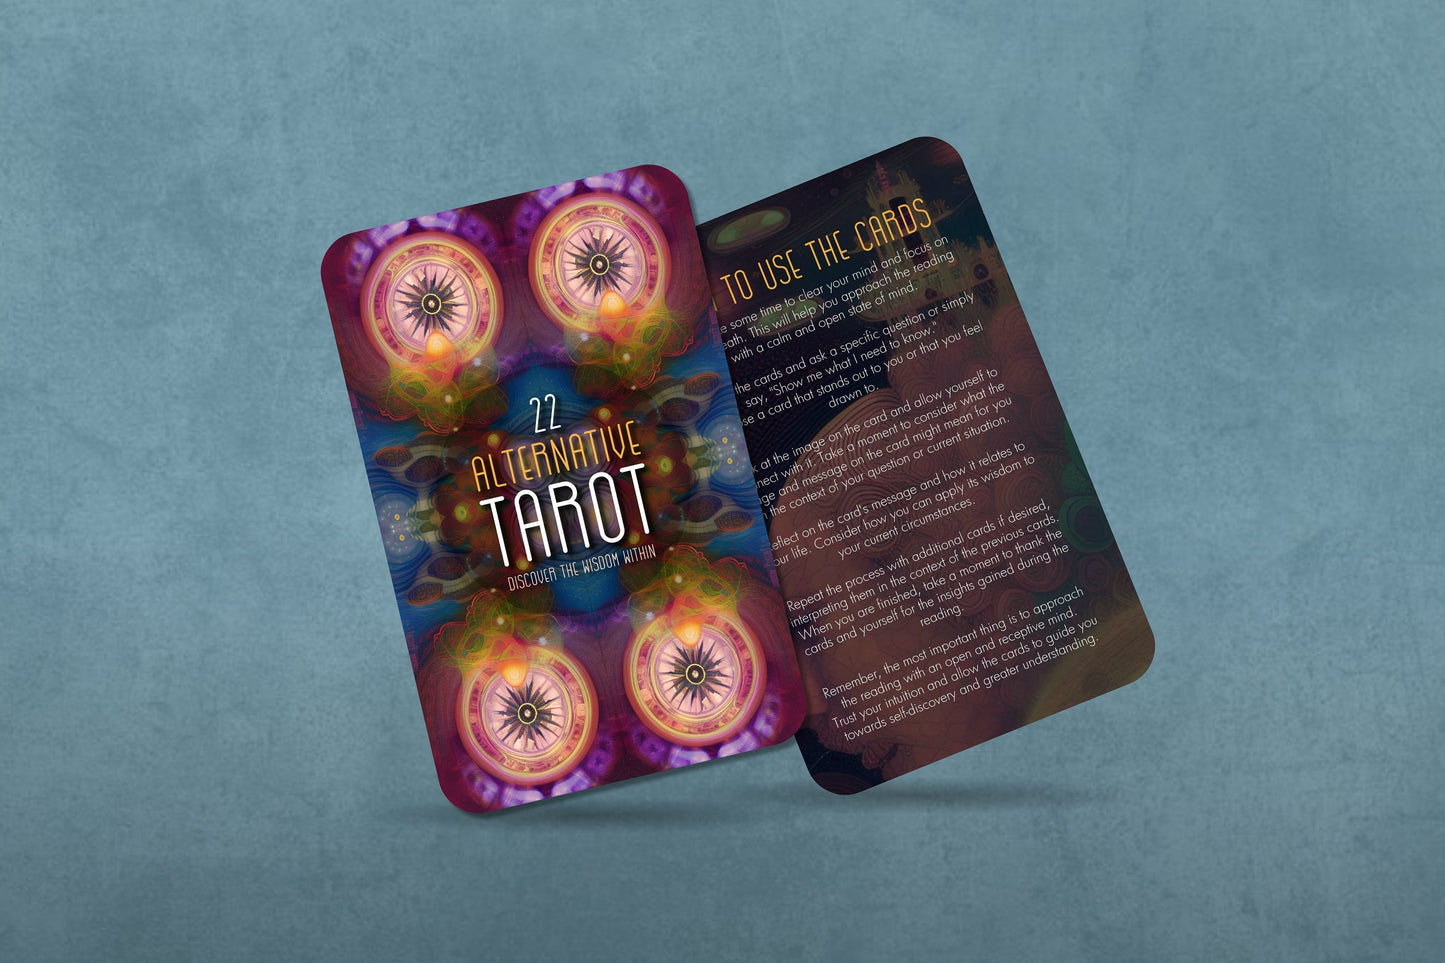 The Alternative Tarot - Discover The Wisdom Within